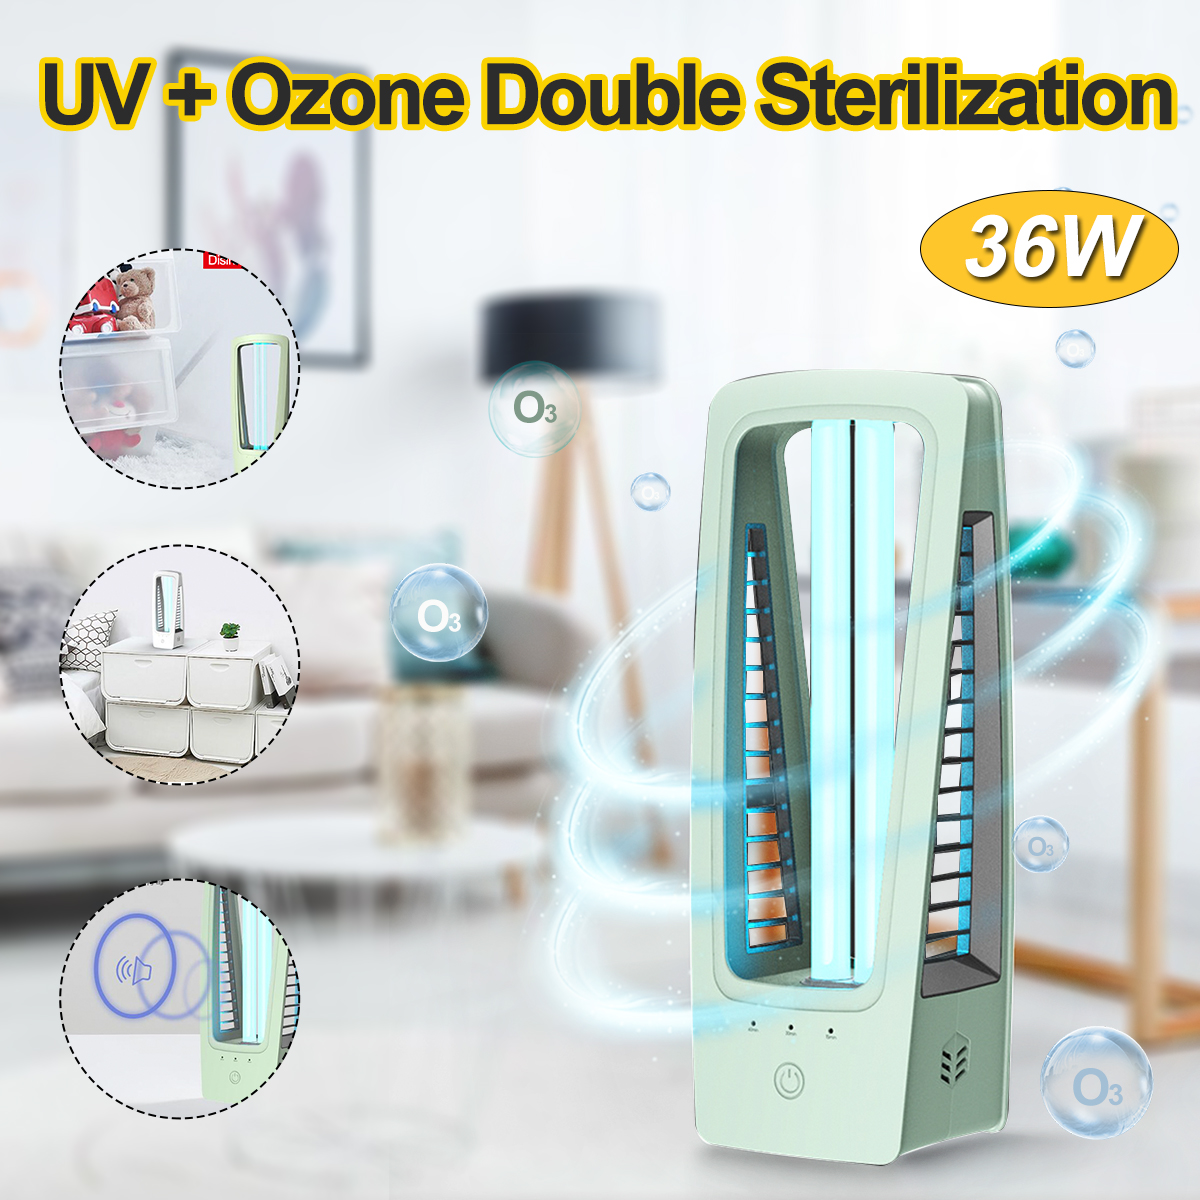 36W-220V-UVOzone-Double-Sterilization-Disinfection-UV-Lamp-Home-Toilet-Office-1668704-1